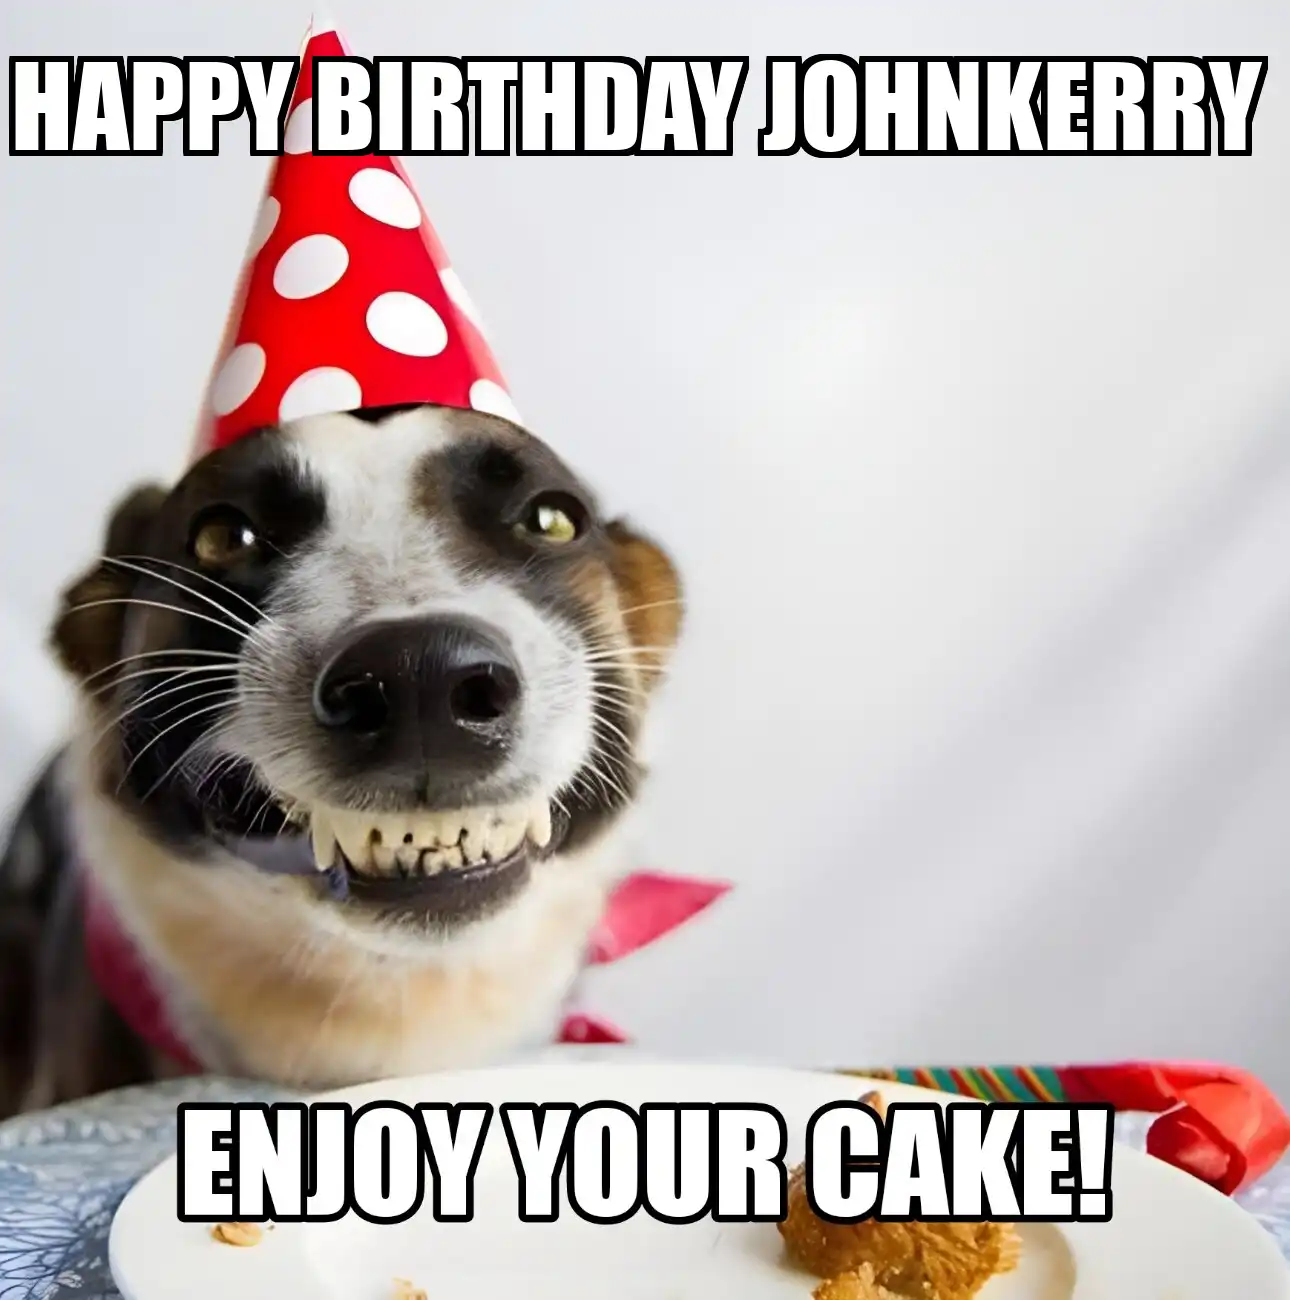 Happy Birthday Johnkerry Enjoy Your Cake Dog Meme